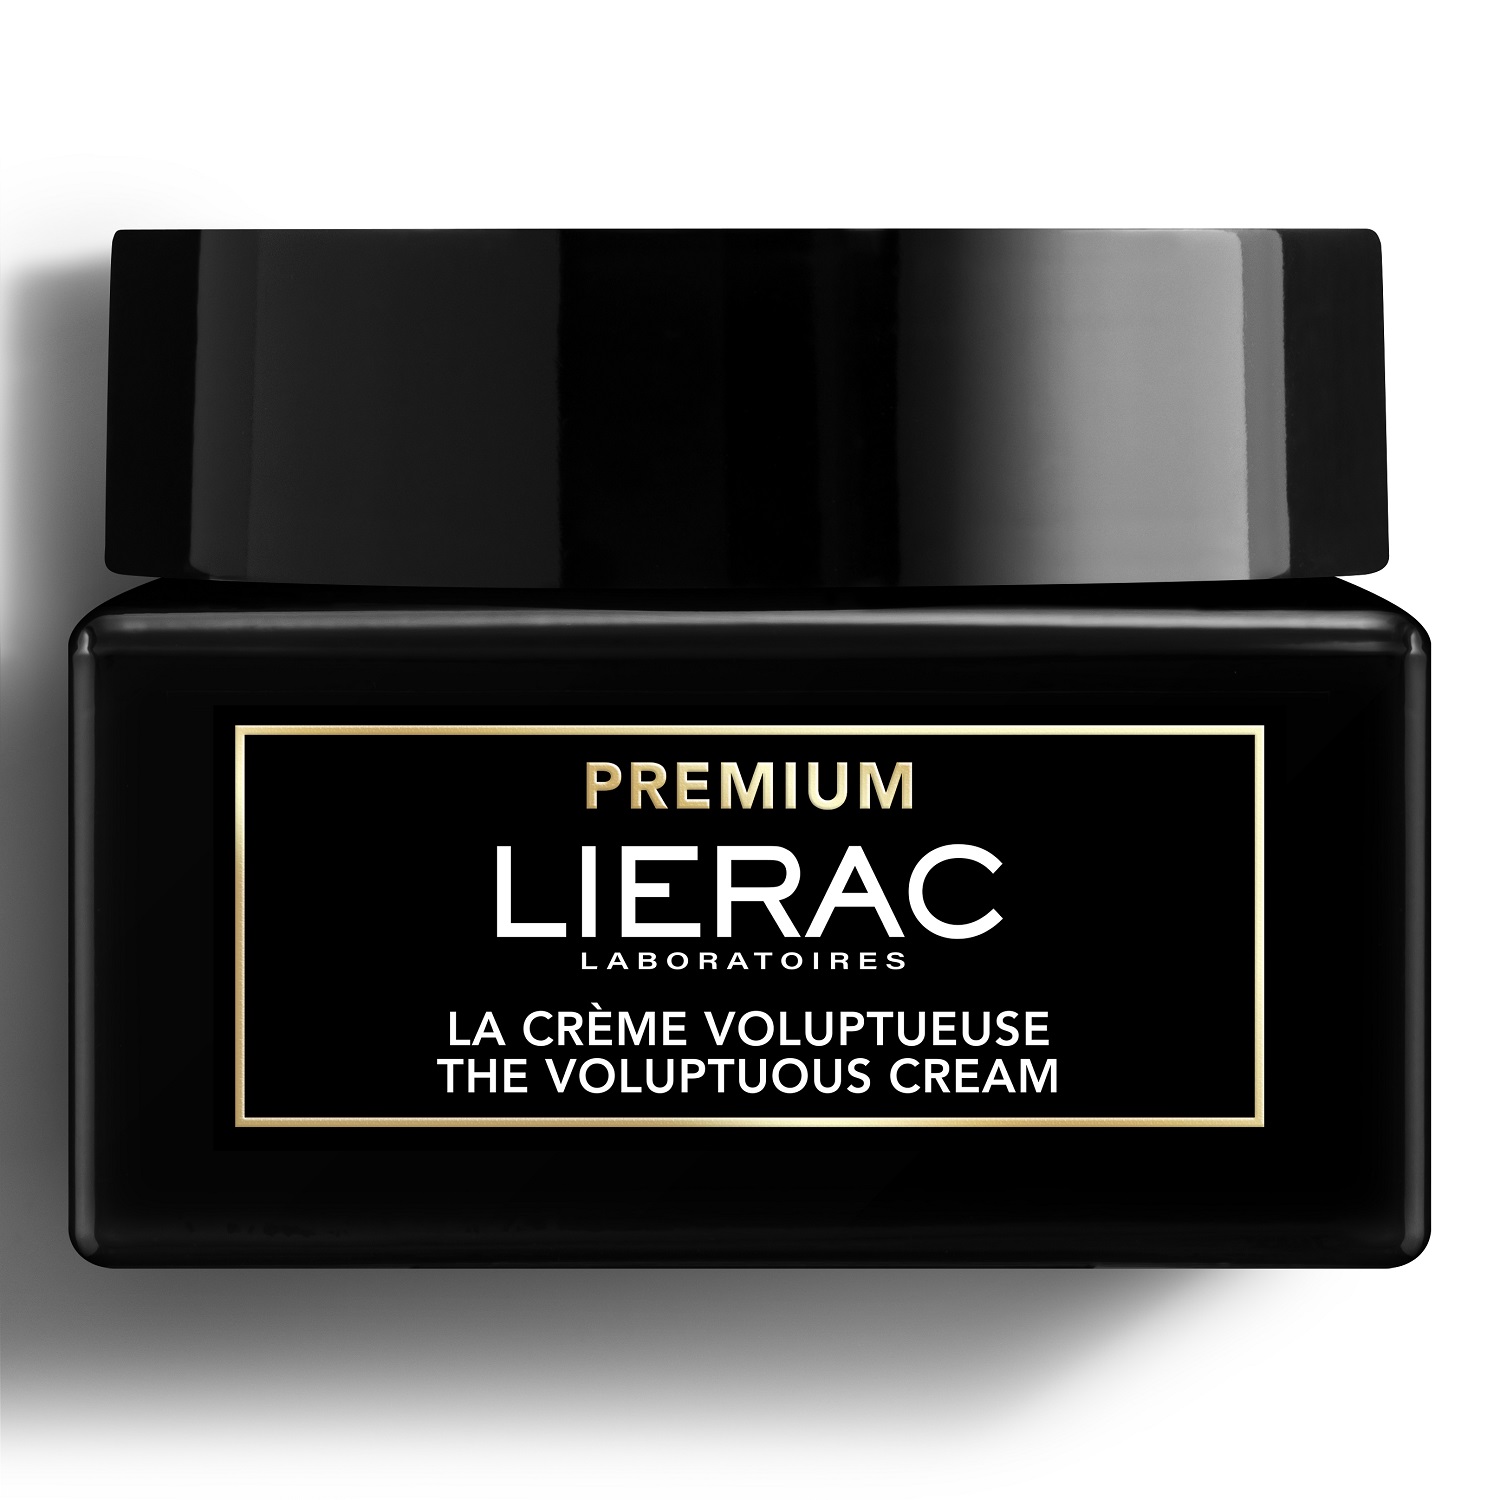 Lierac Насыщенный крем для лица, 50 мл (Lierac, Premium) lierac премиум насыщенный крем сменный блок 50 мл